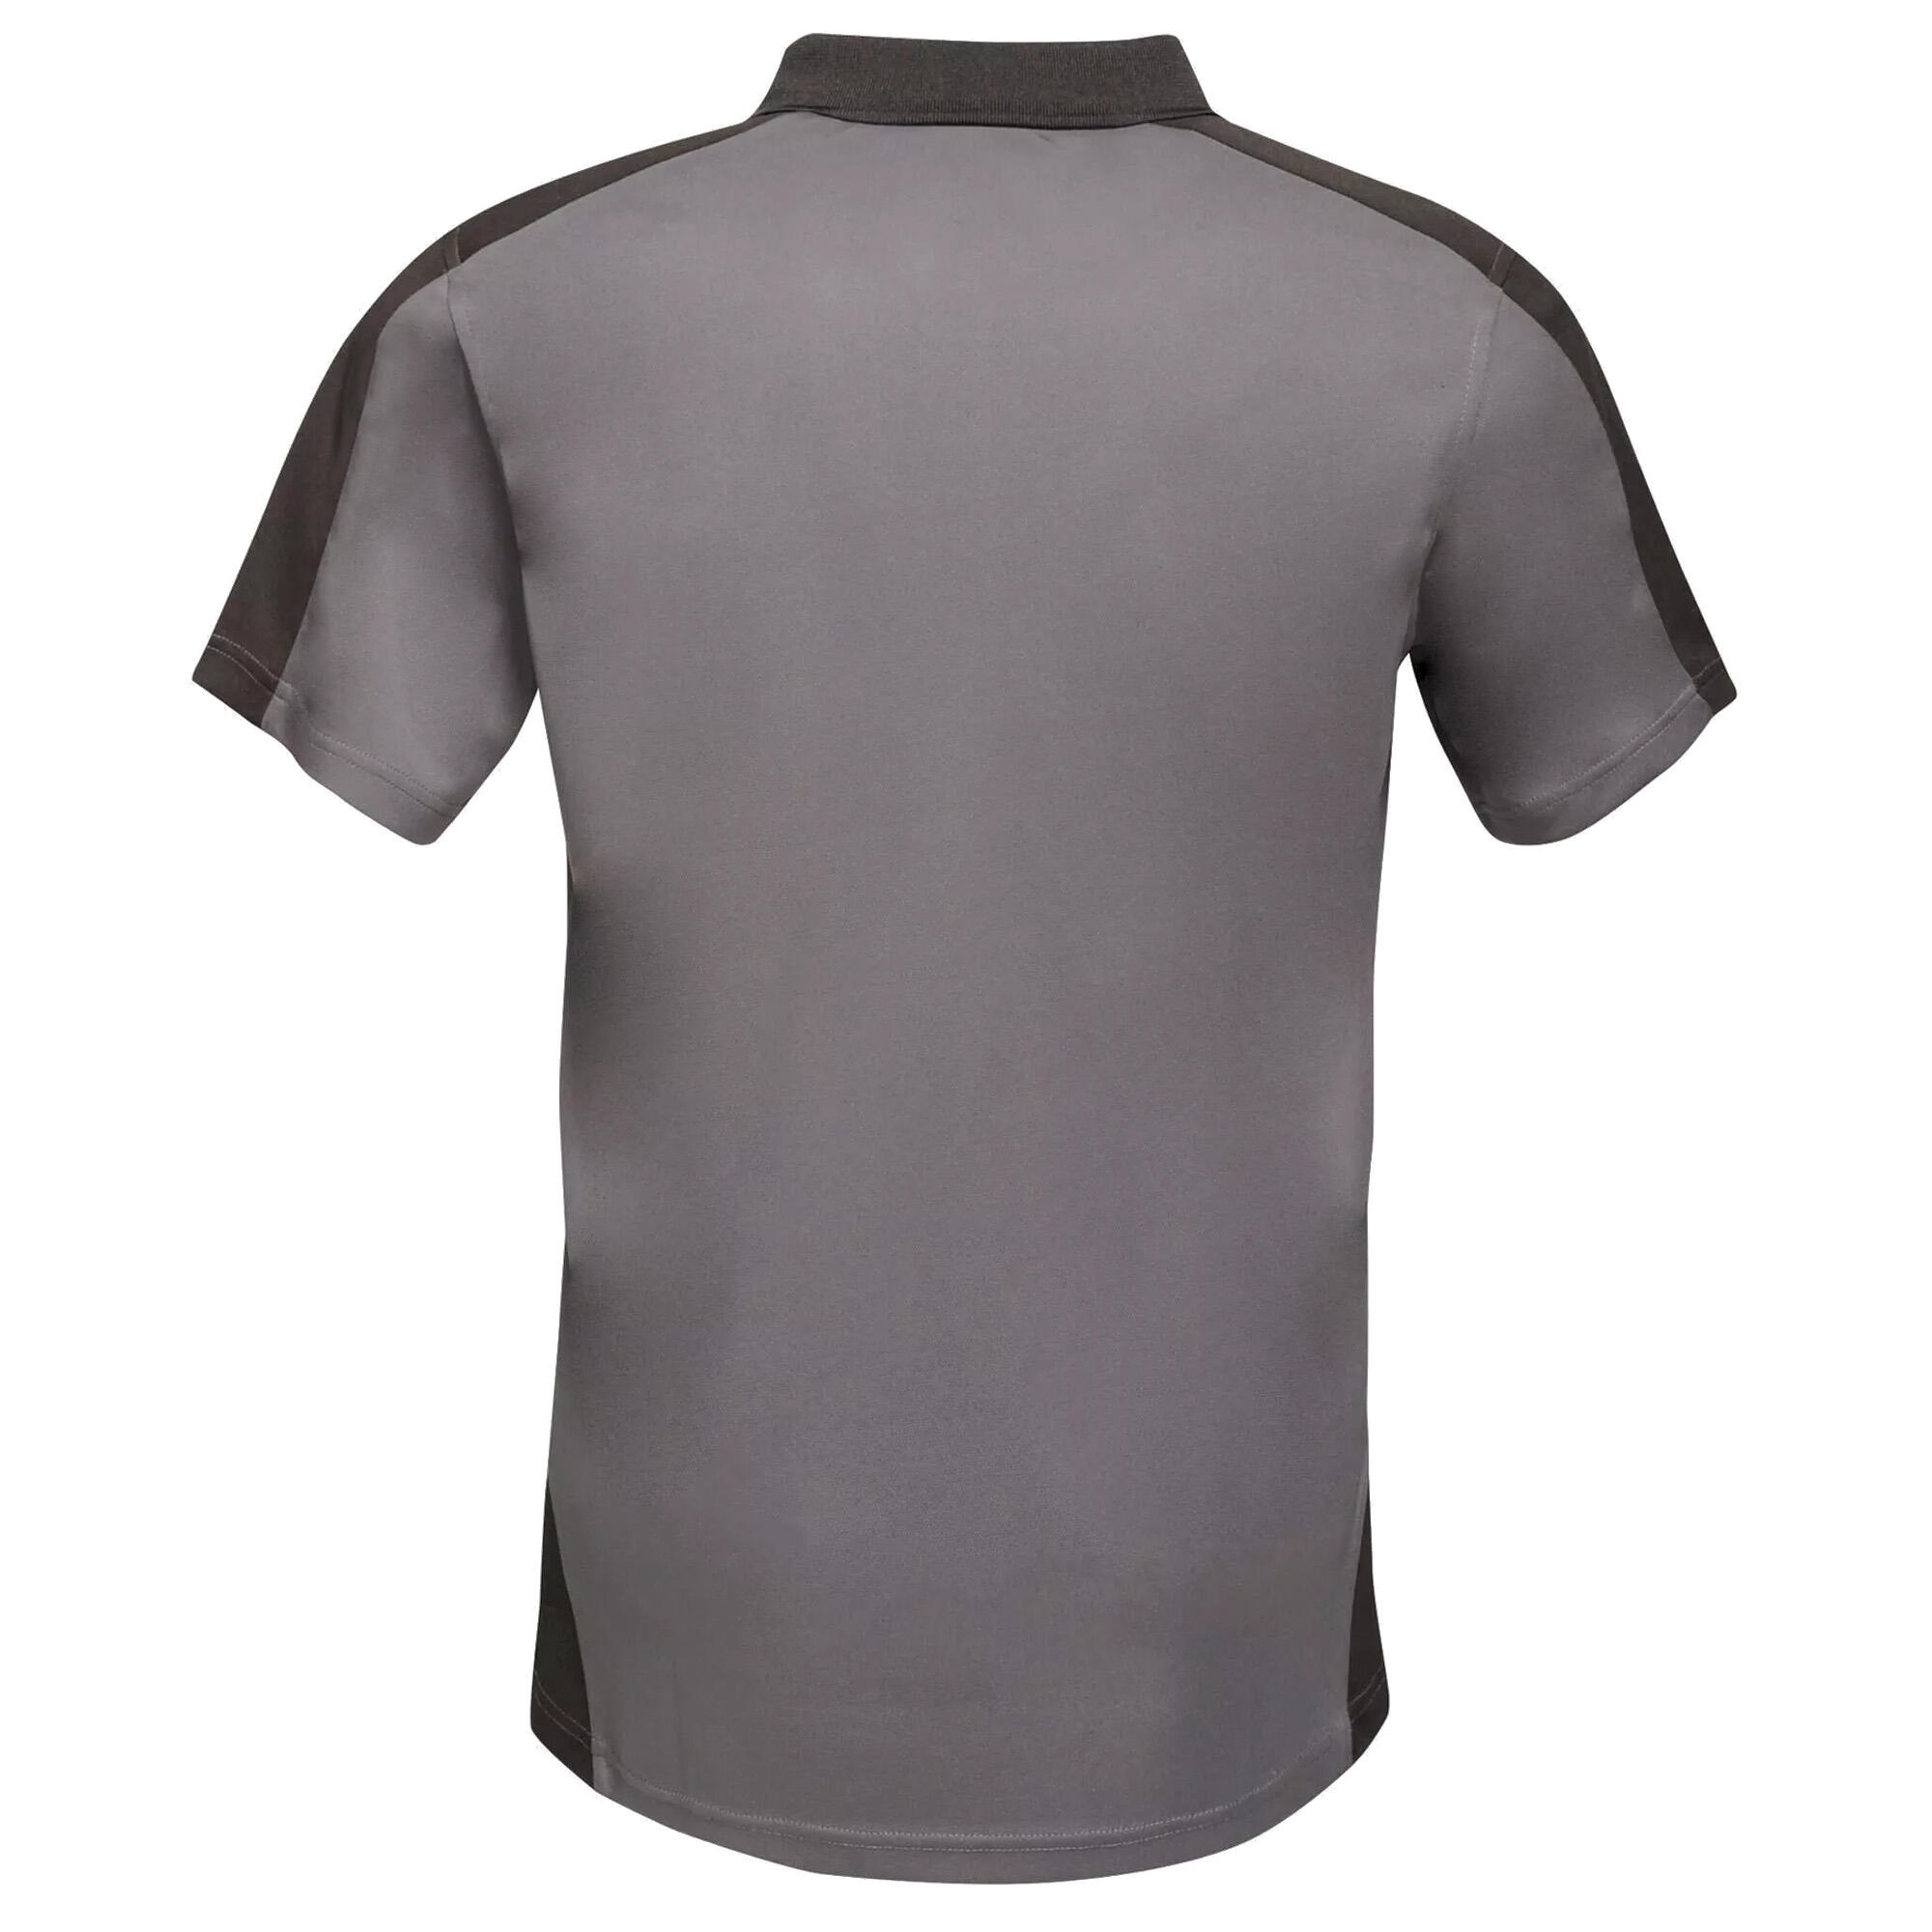 Contrast Coolweave Pique Polo Shirt (Seal Grey/Black) 2/4